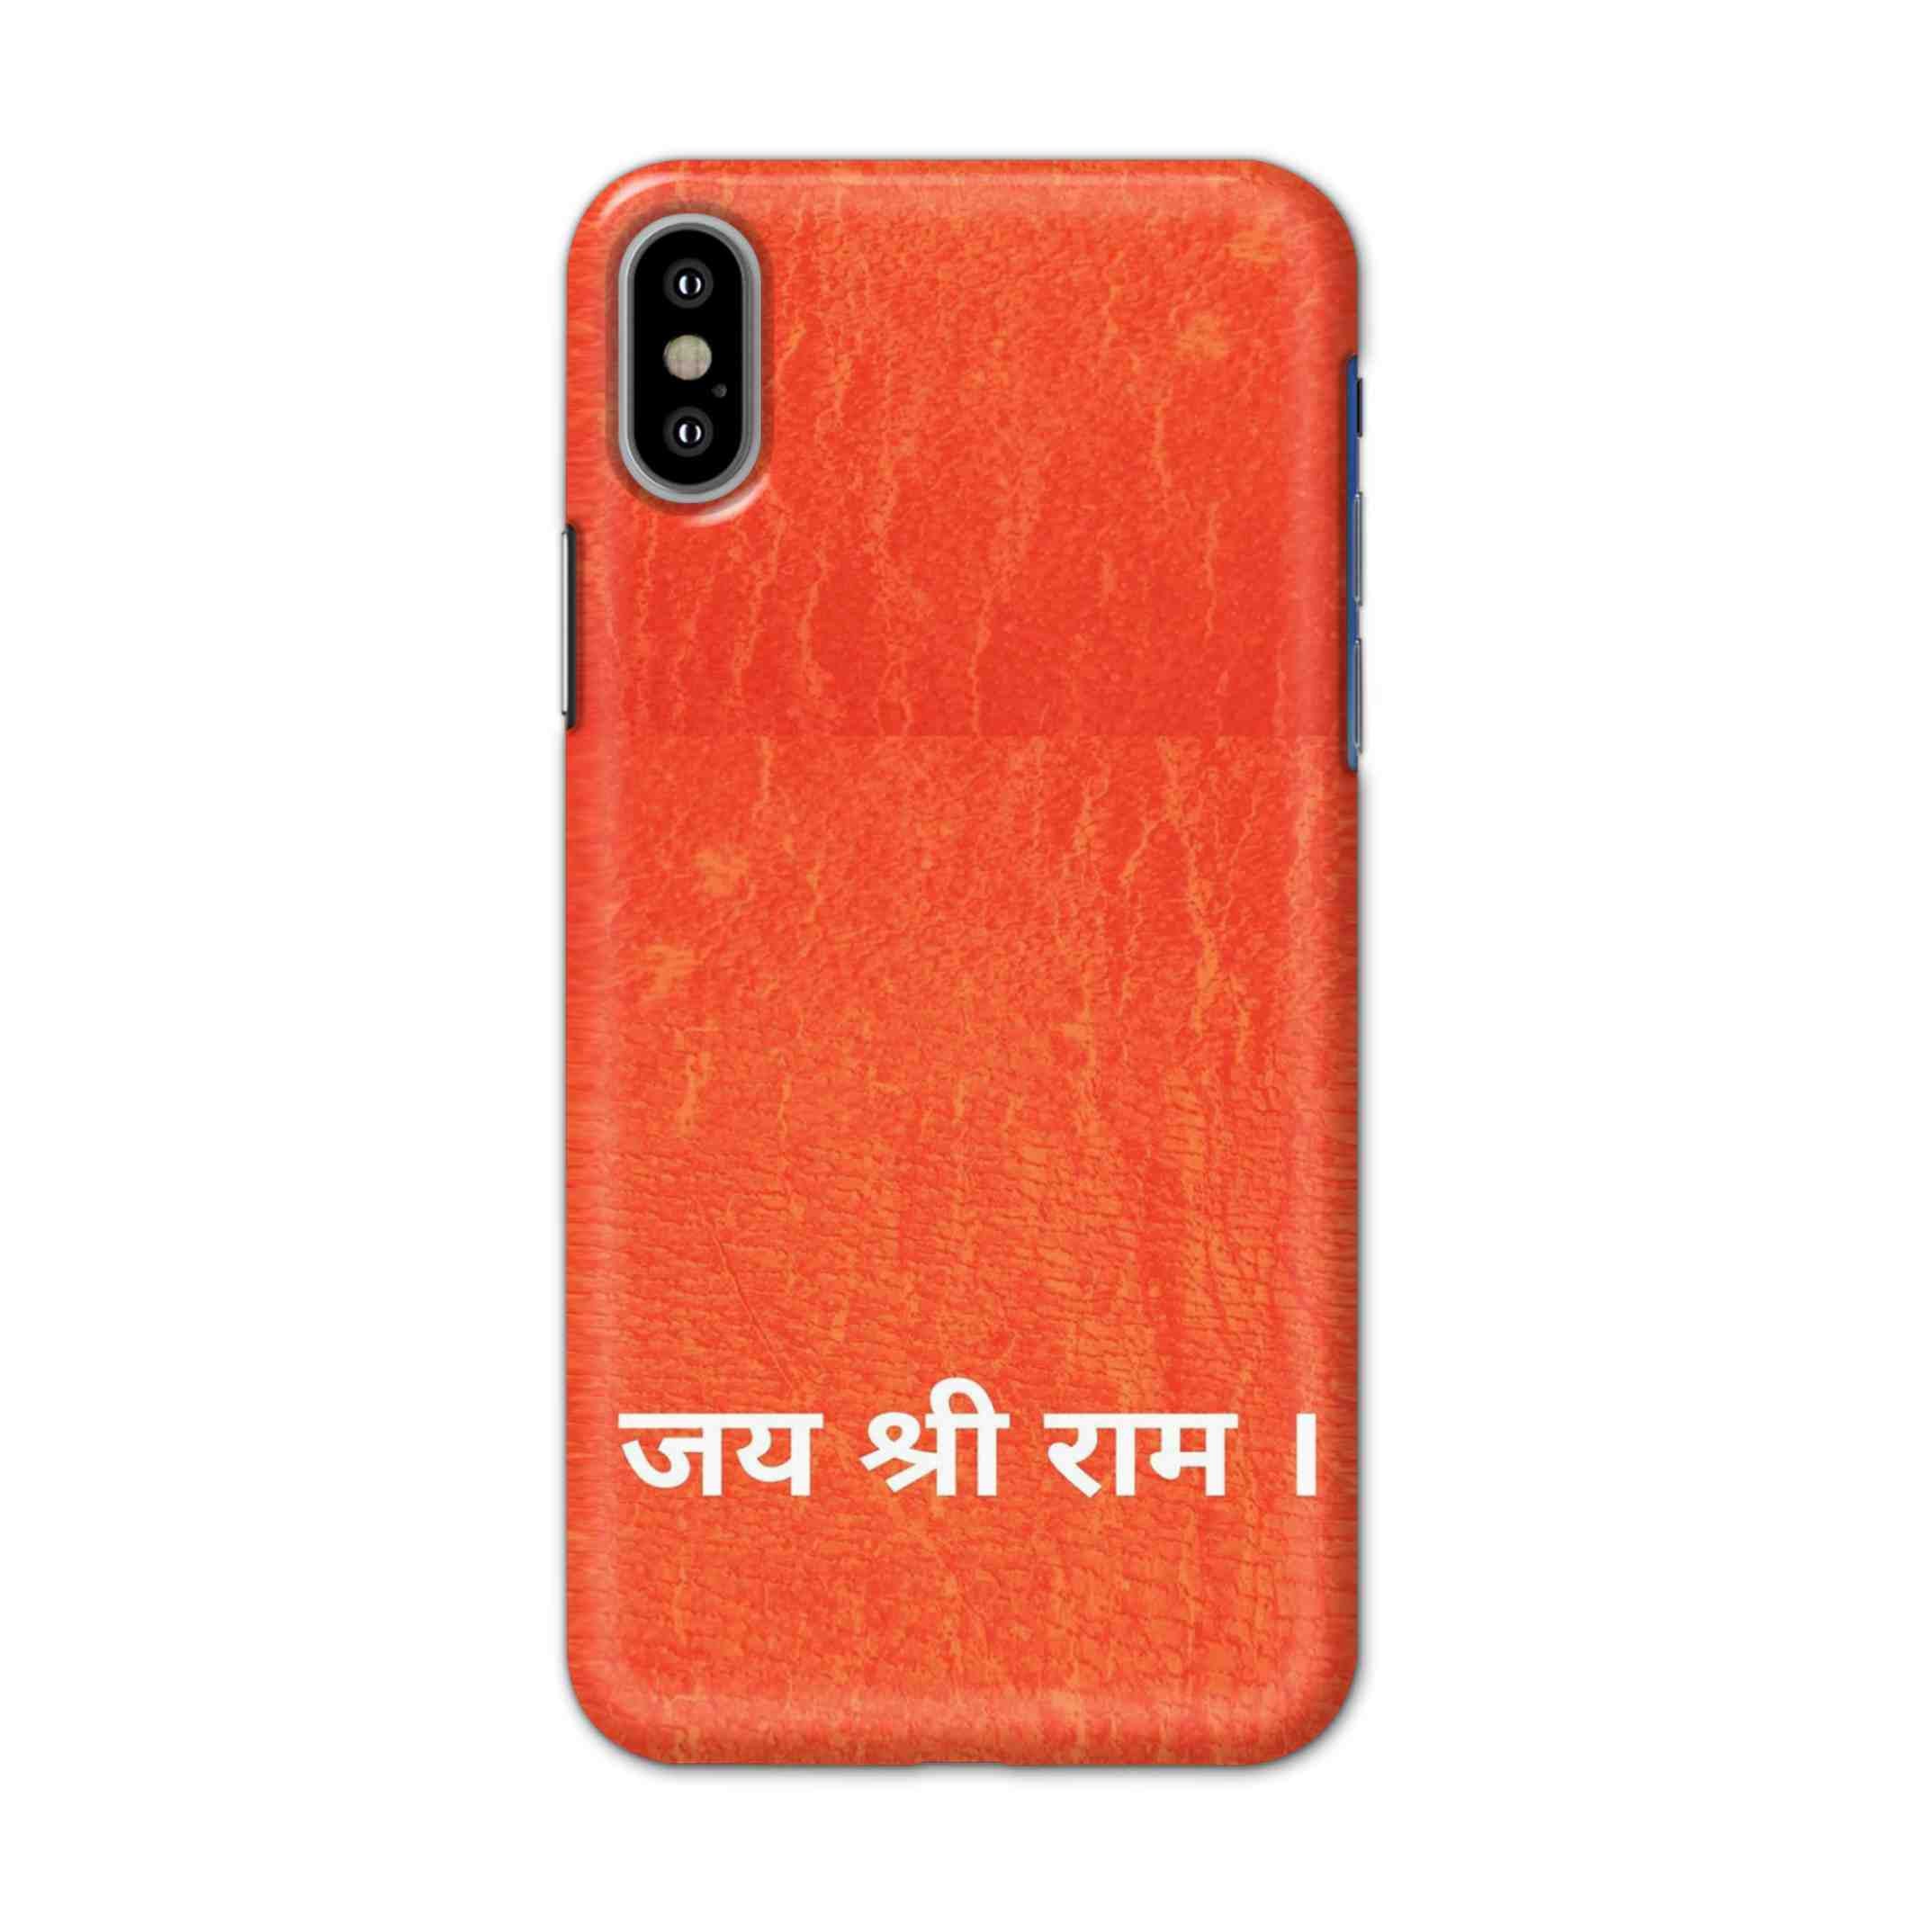 Buy Jai Shree Ram Hard Back Mobile Phone Case/Cover For iPhone X Online